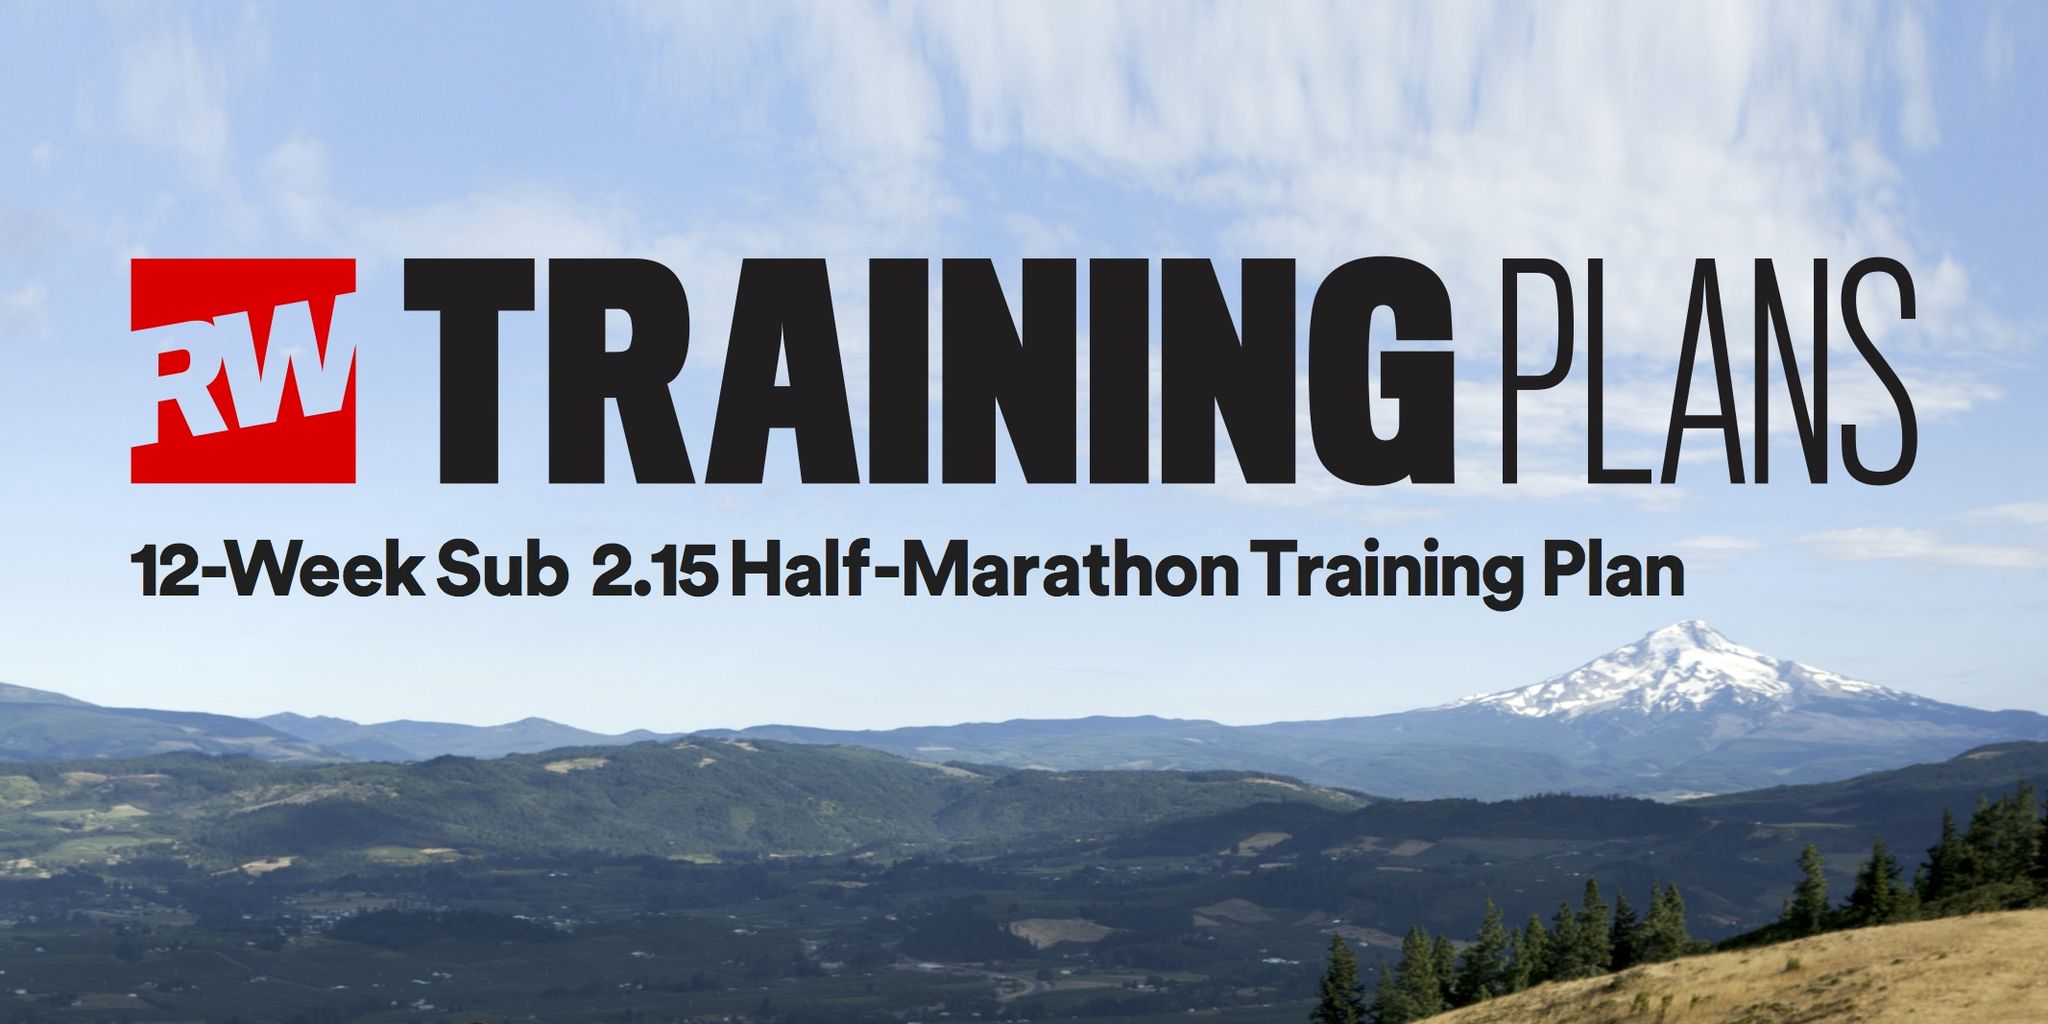 sub-2:15 half marathon training plan